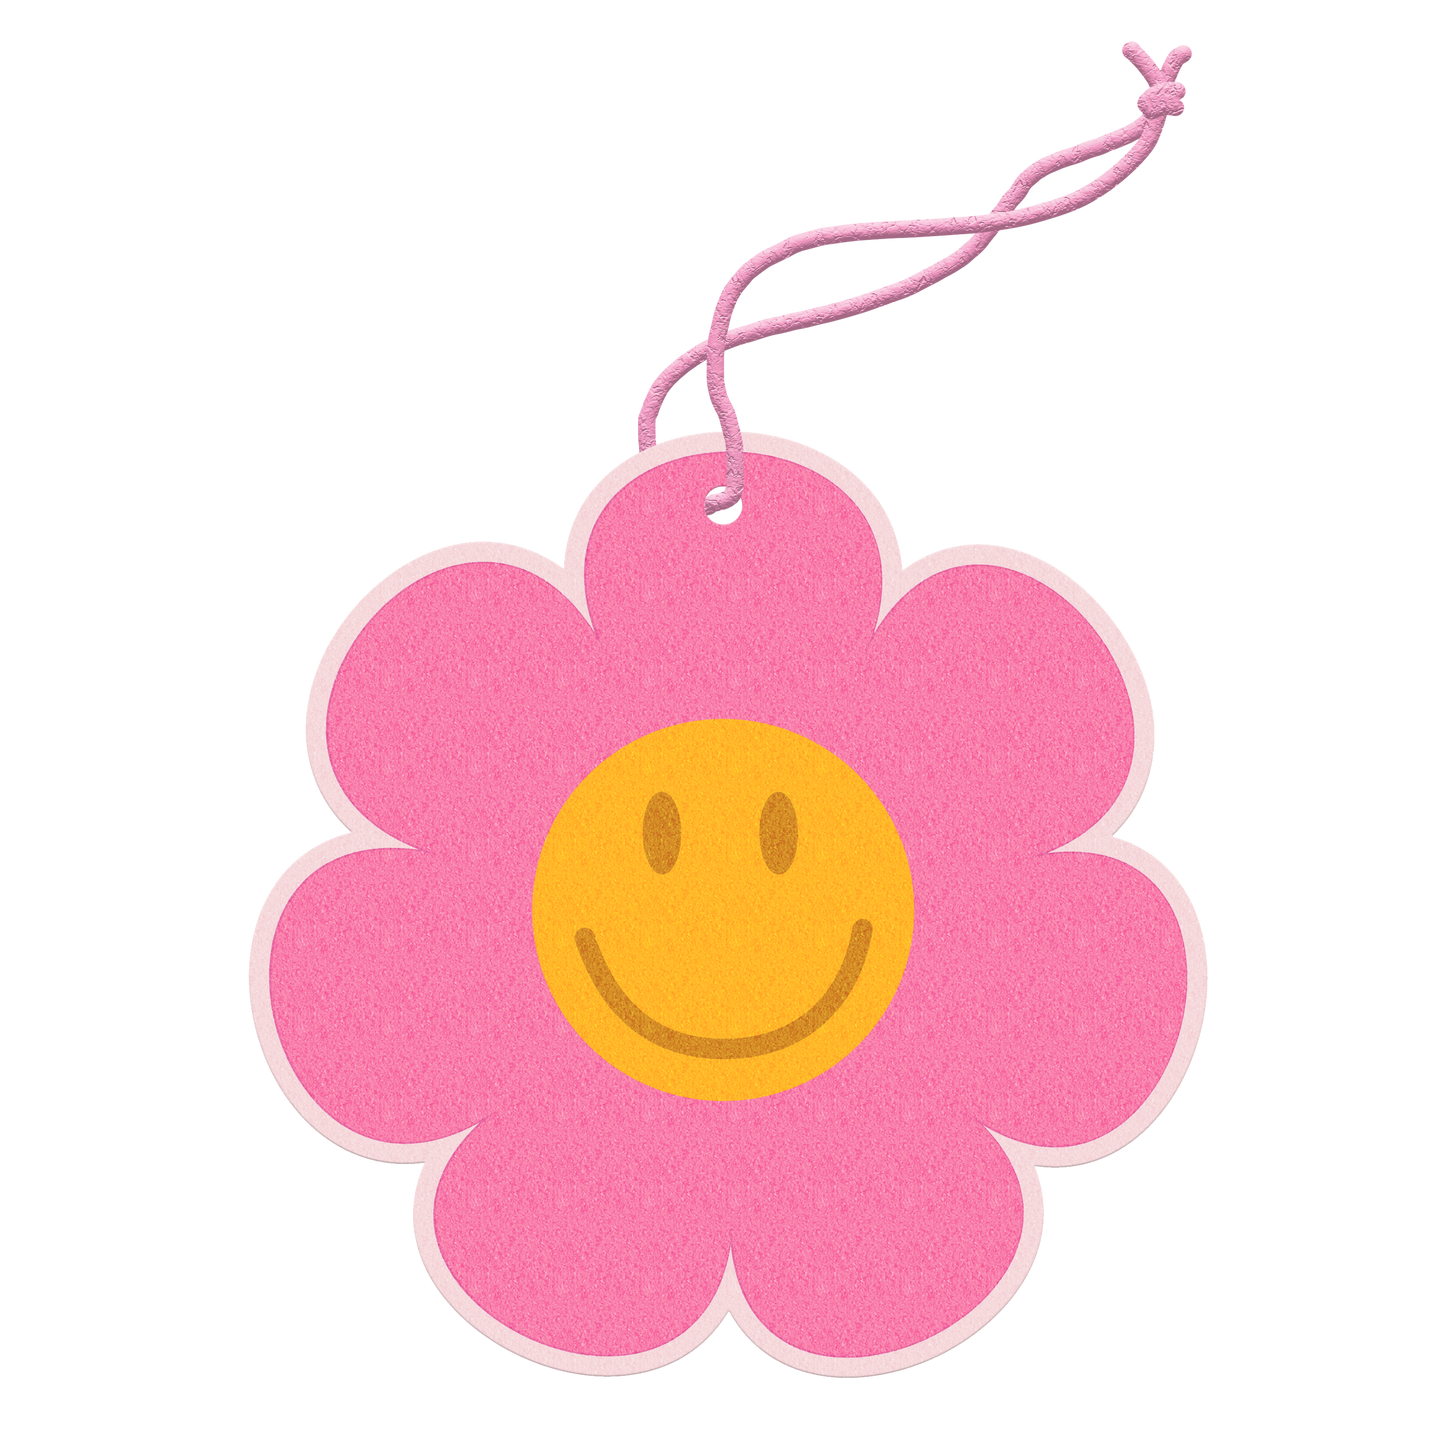 Air Freshener - Pink Smiley Daisy